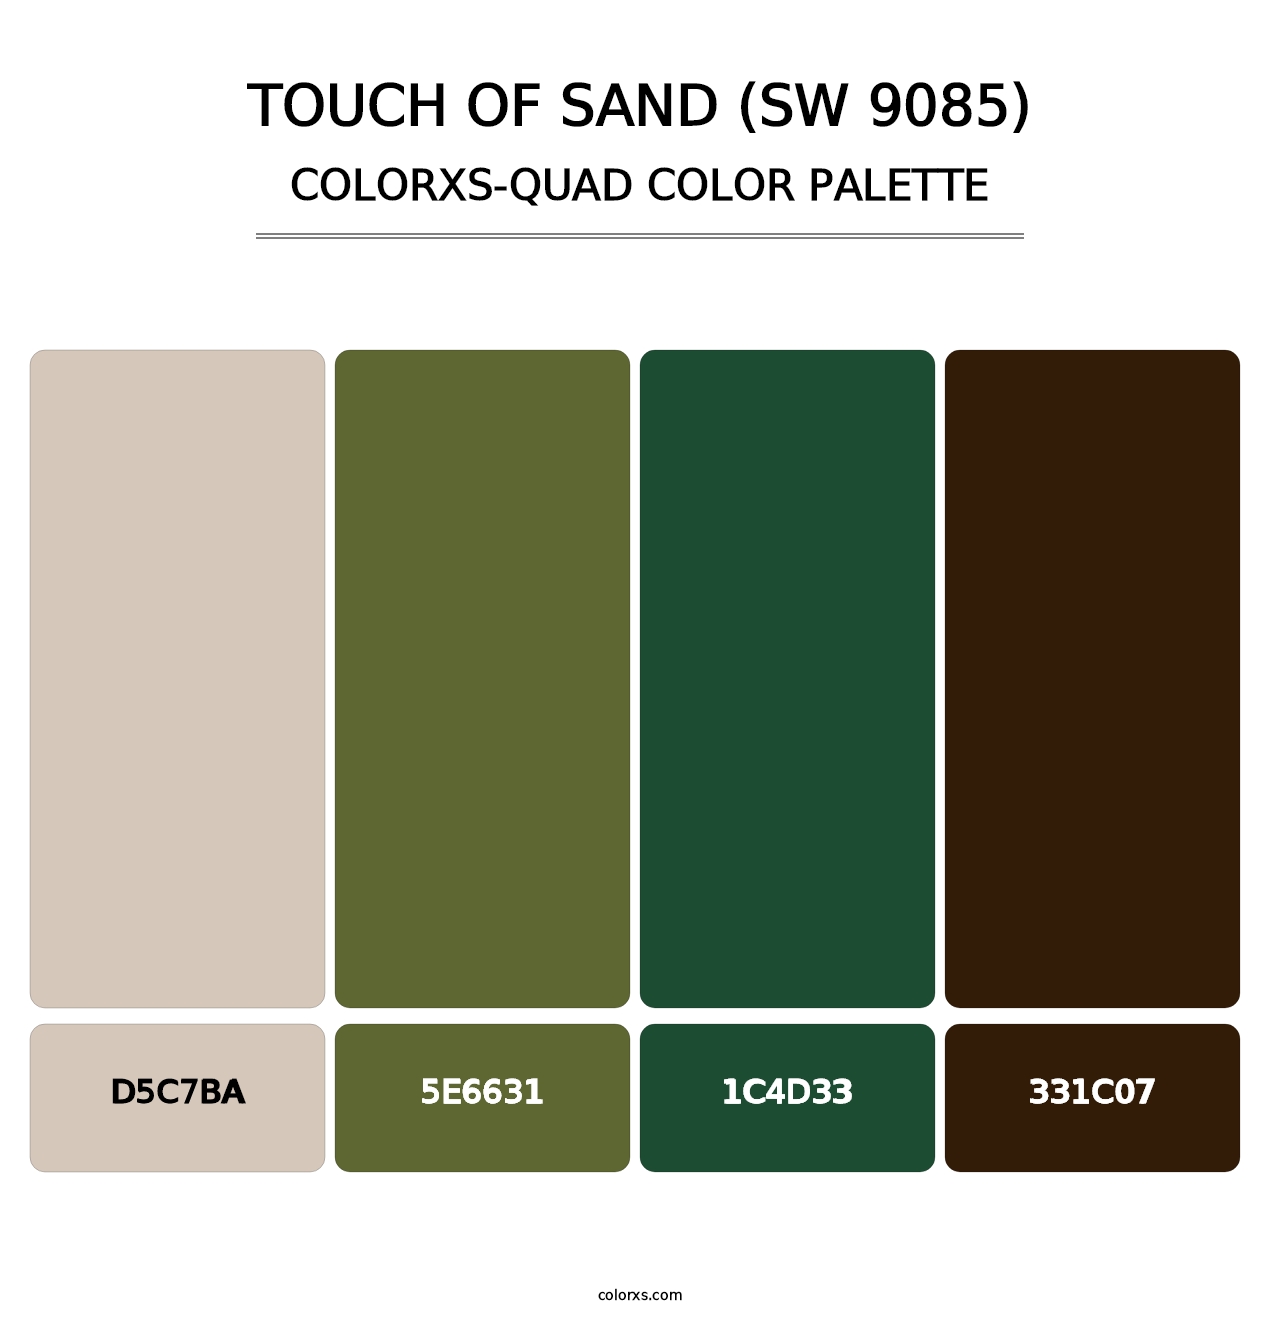 Touch of Sand (SW 9085) - Colorxs Quad Palette